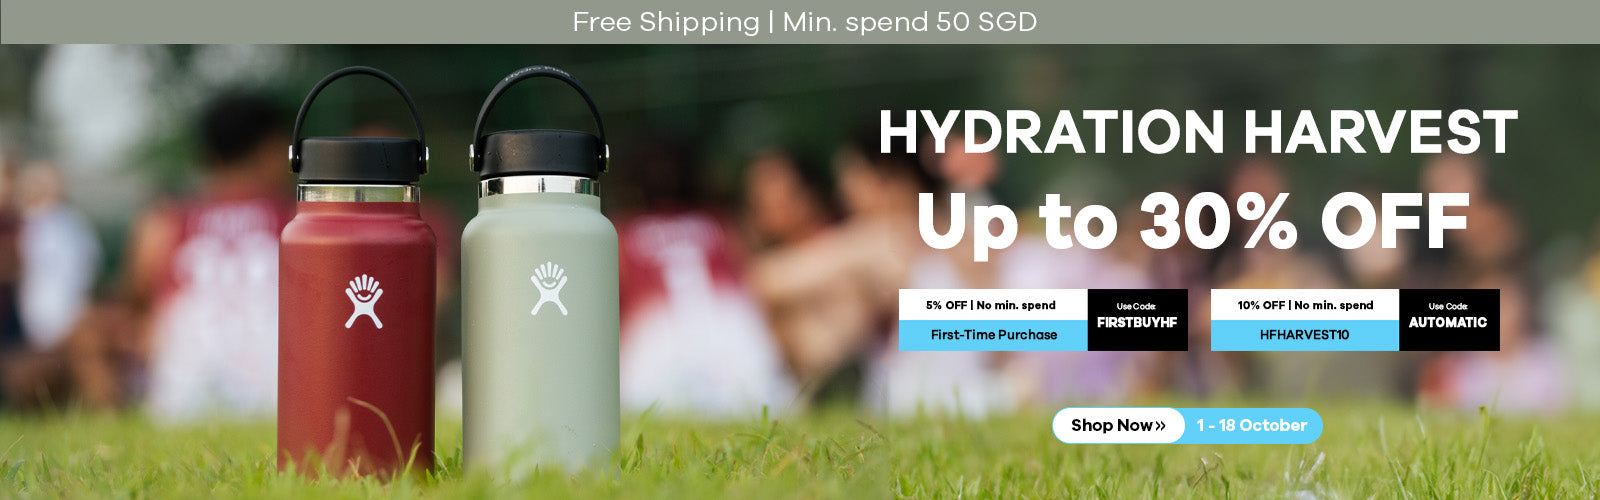 Hydro Flask Singapore